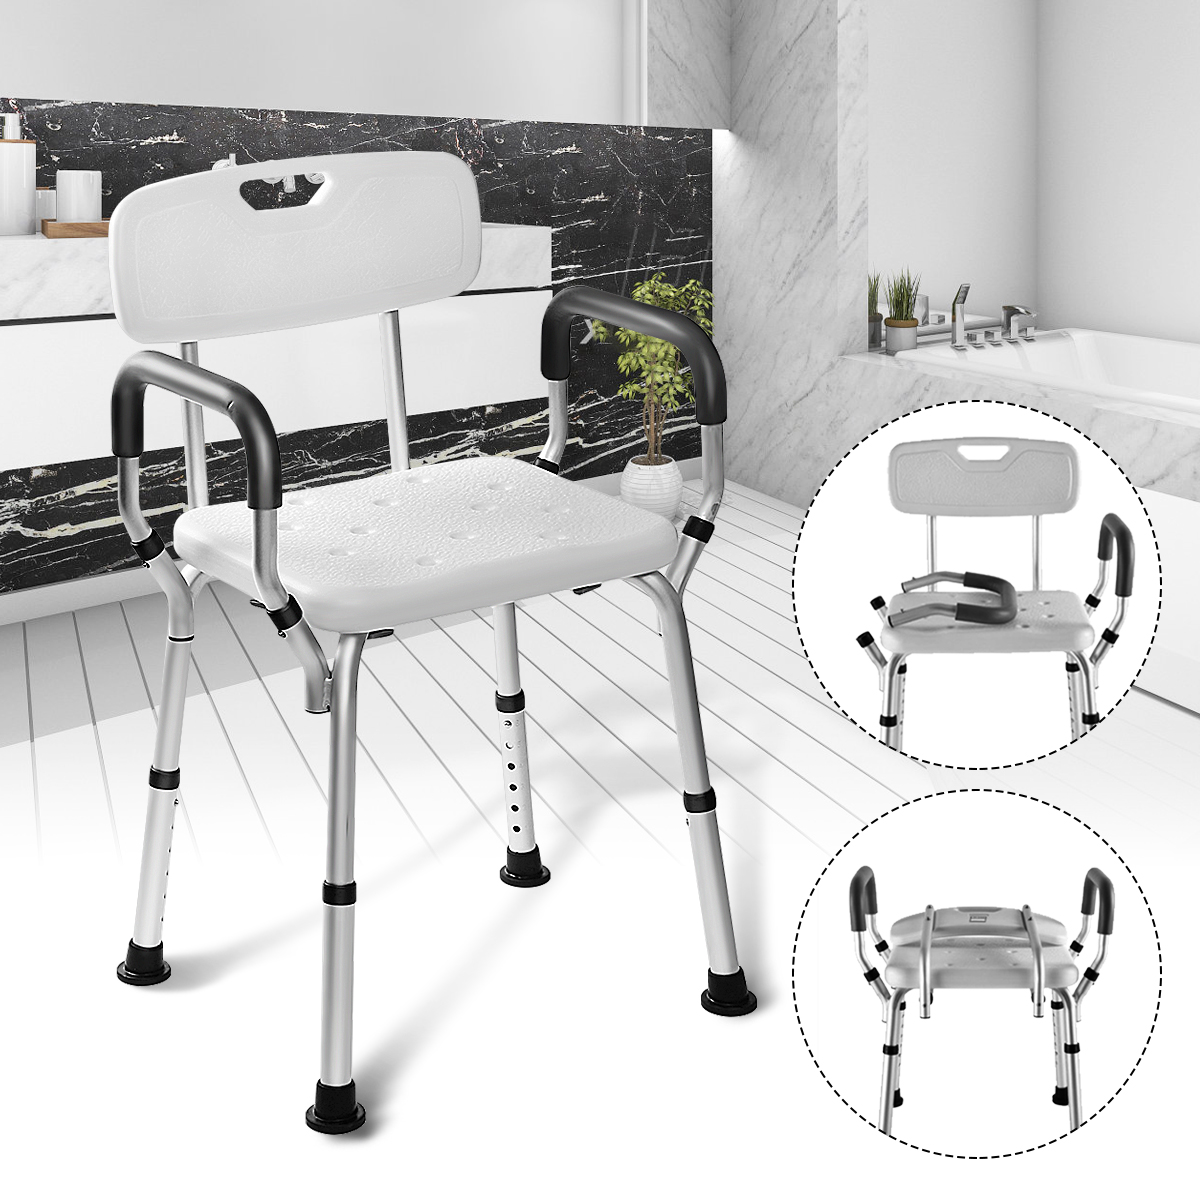 

Adjustable Medical Shower Folding Chair Bathtub Bench Bath Seat Aid Stool Armrest Back